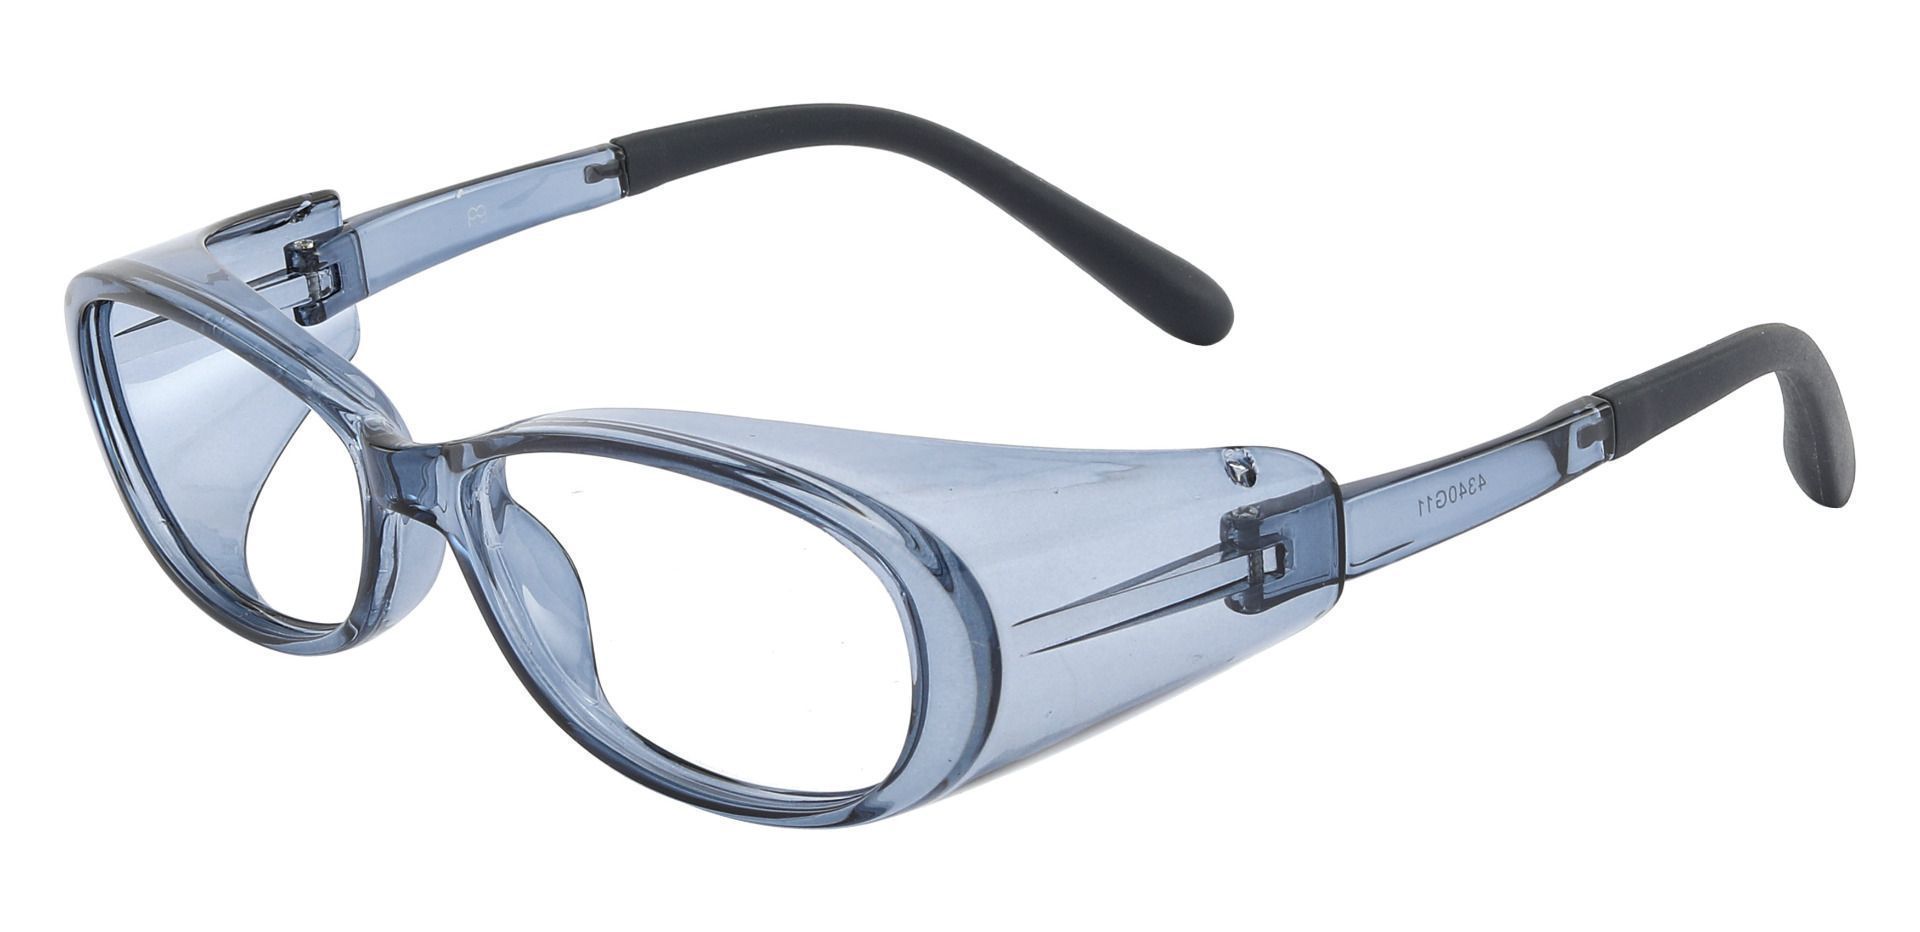 Holt Sports Goggles Prescription Glasses - Gray